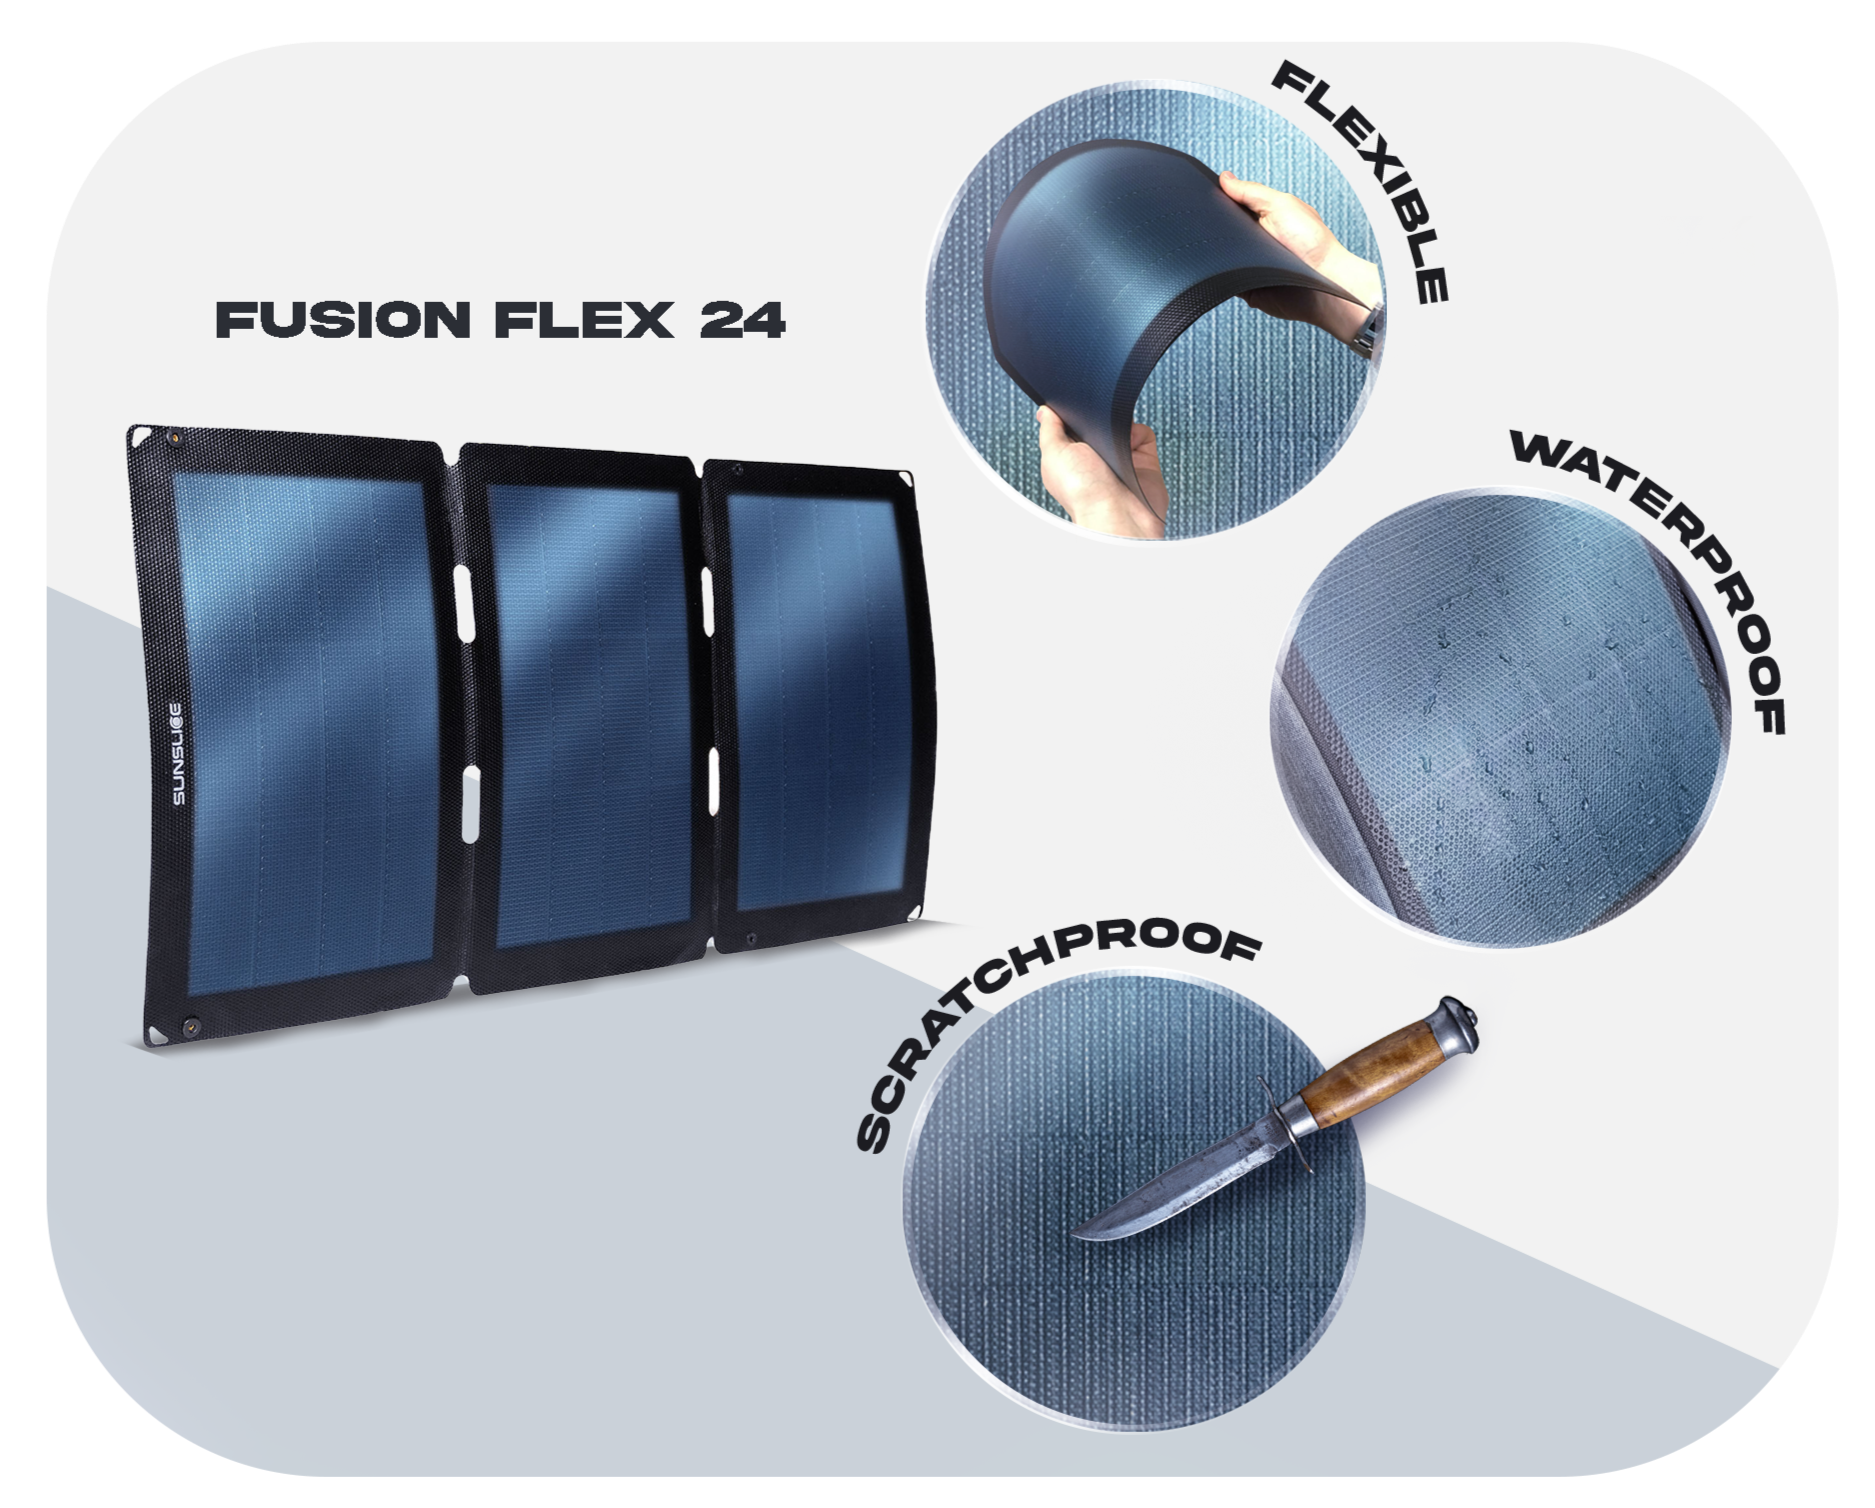 Fusion FLEX 24 Watt - Tragbares Solarmodul - Sunslice